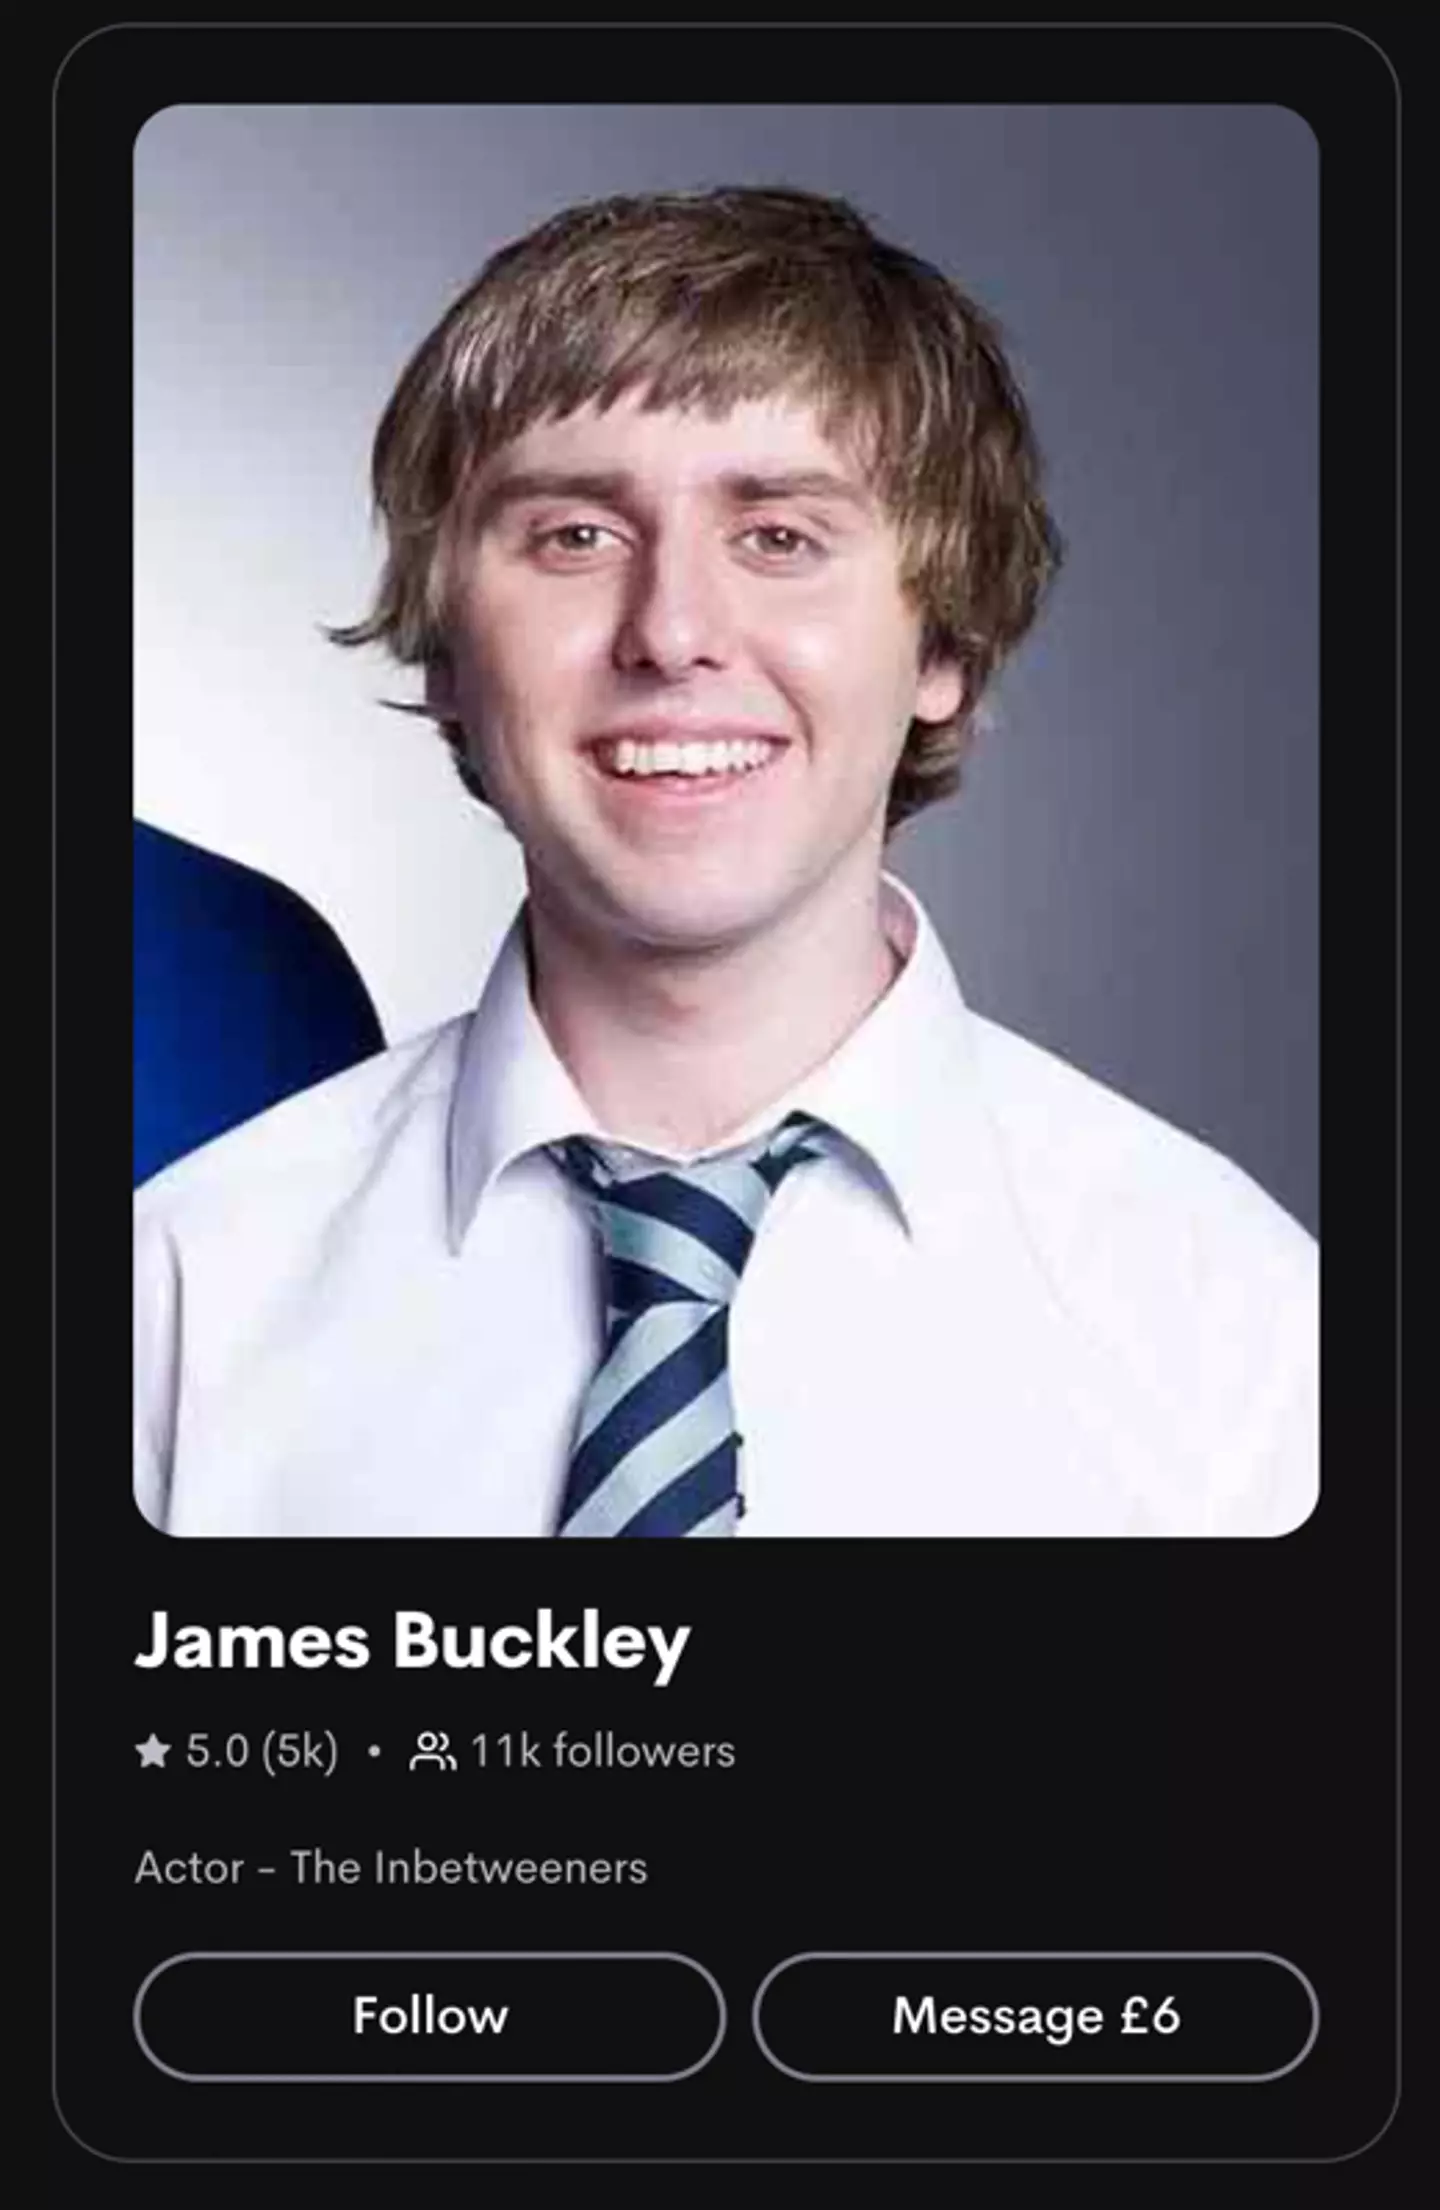 James Buckley played Jay in The Inbetweeners.